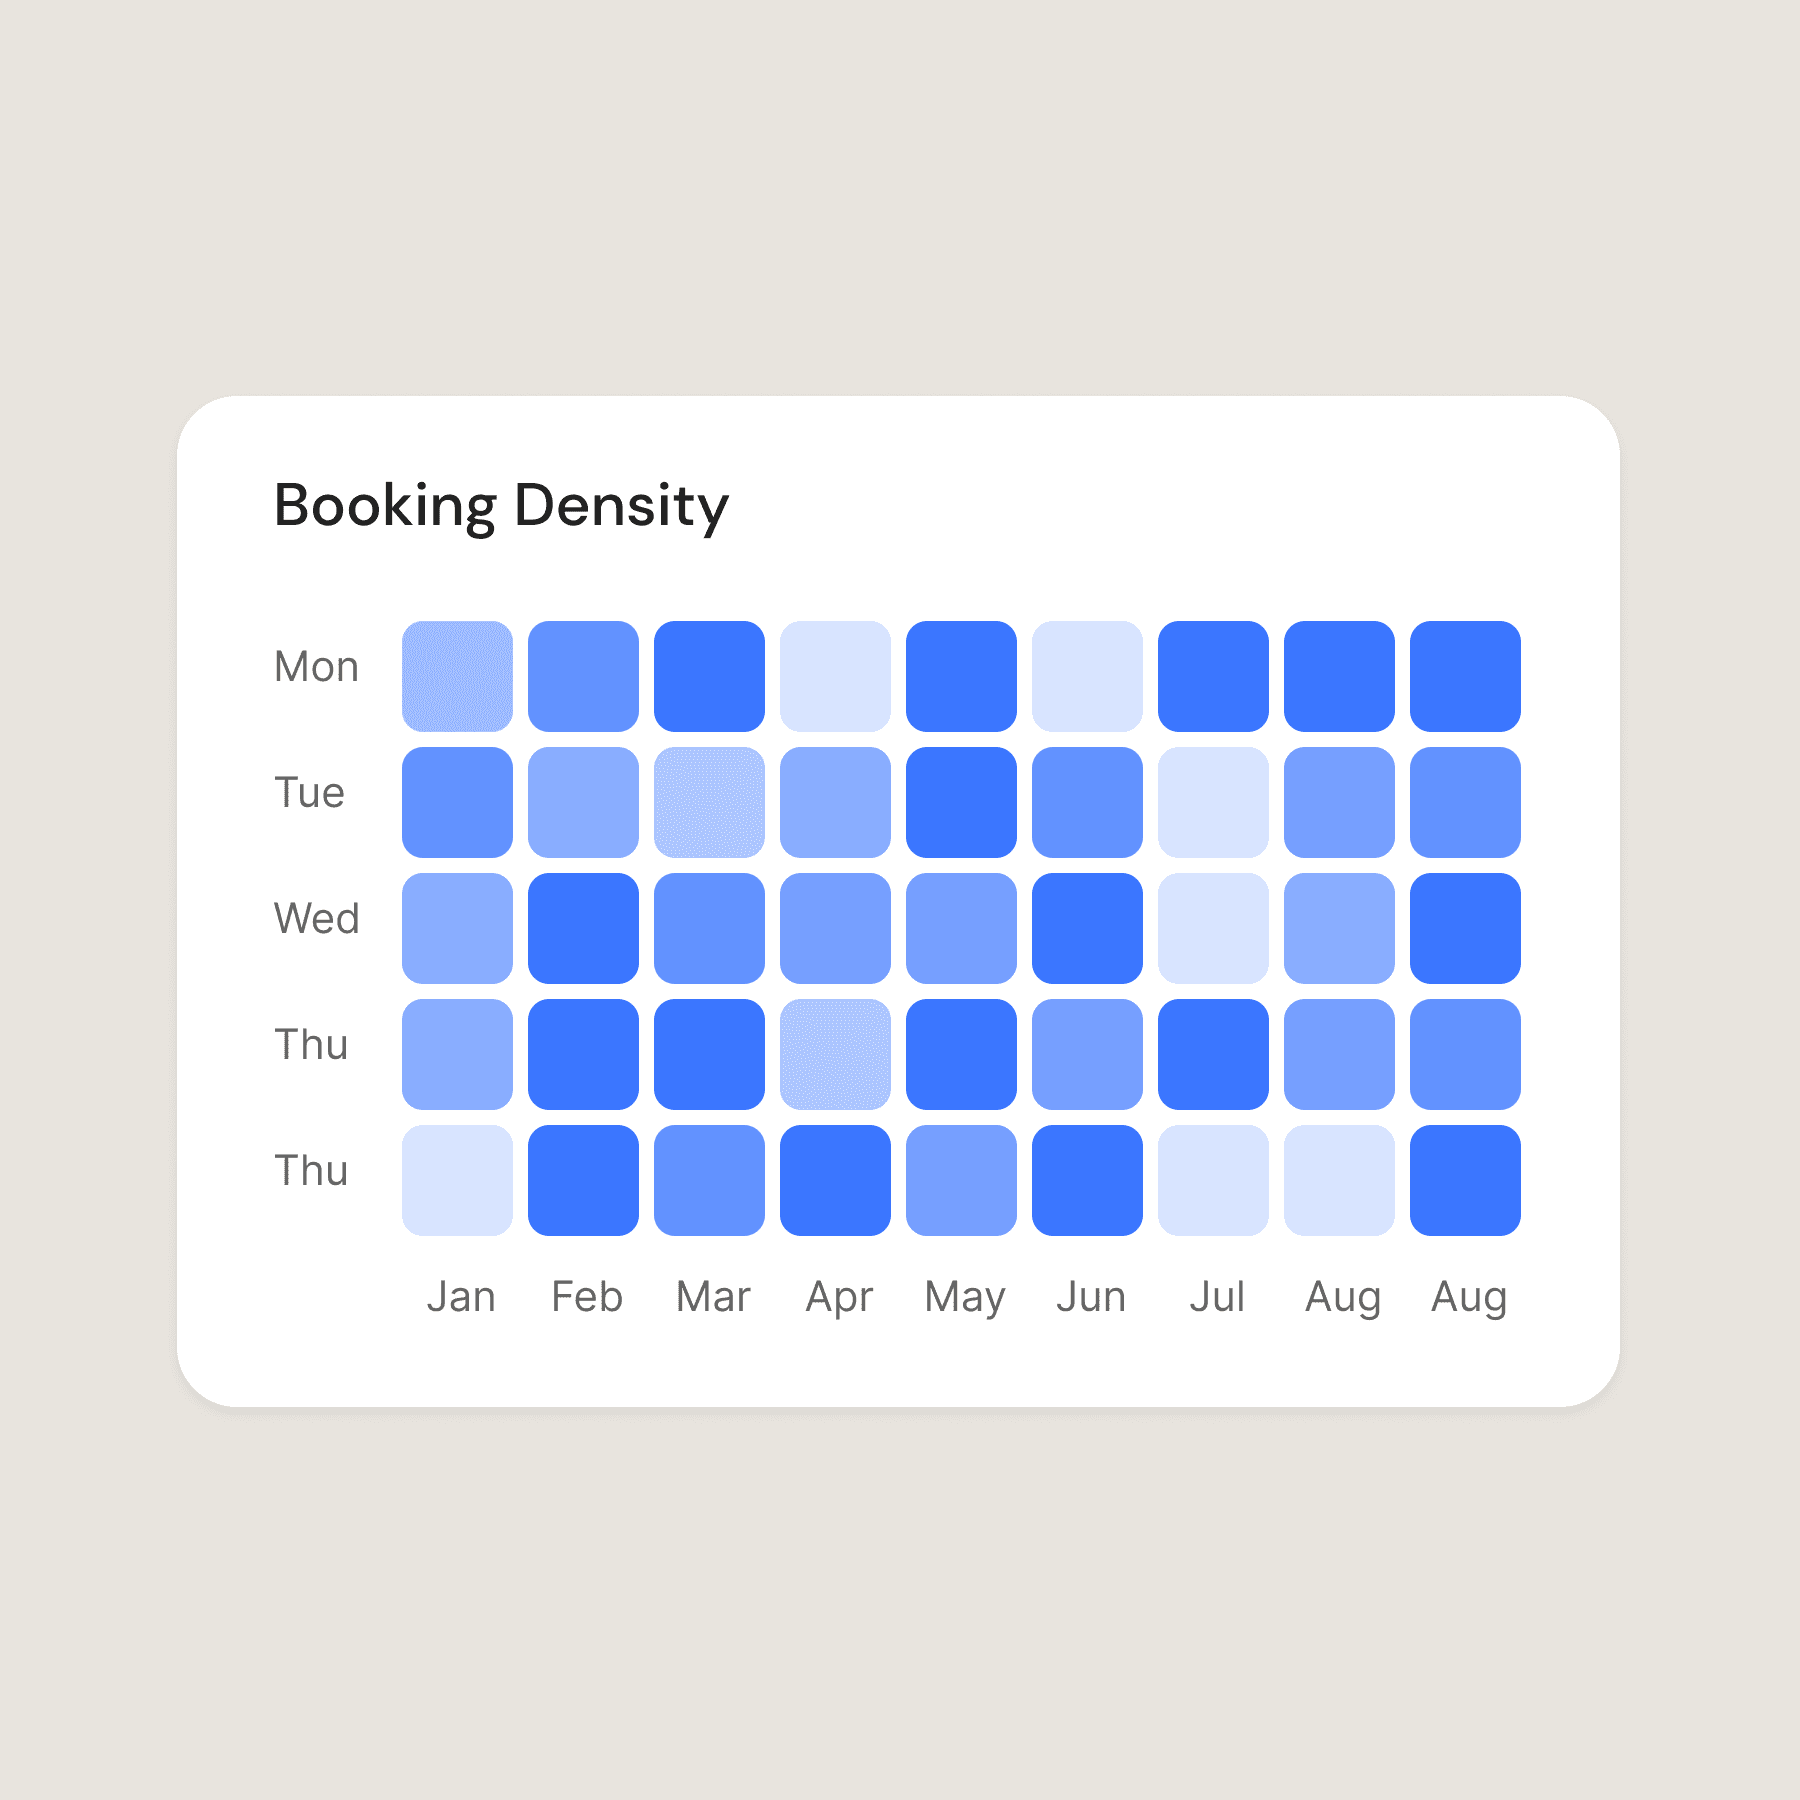 Booking Density